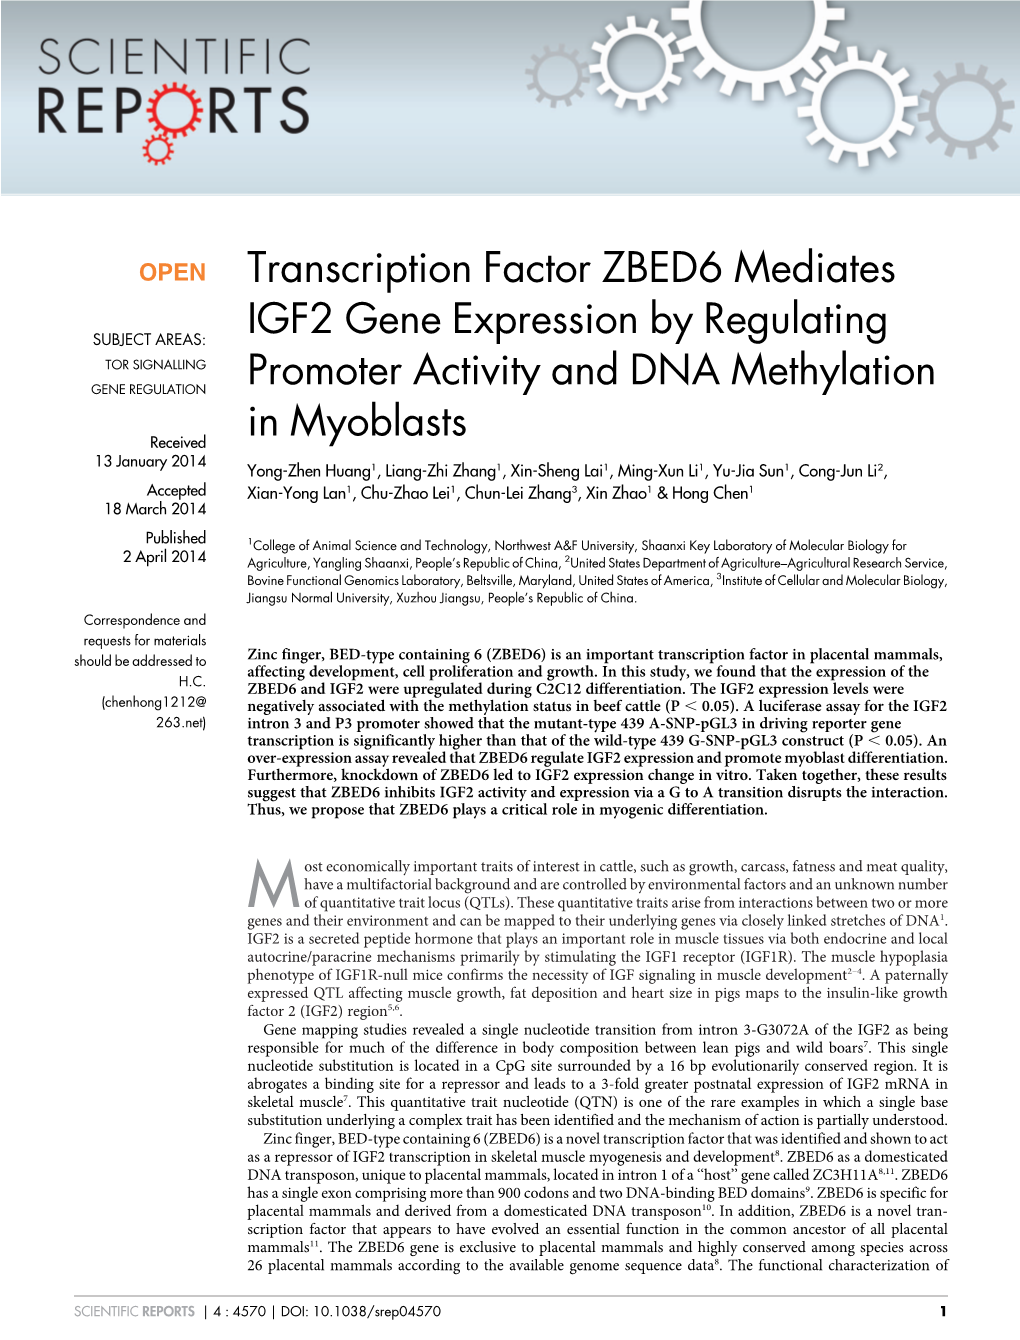 Transcription Factor ZBED6 Mediates IGF2 Gene Expression By